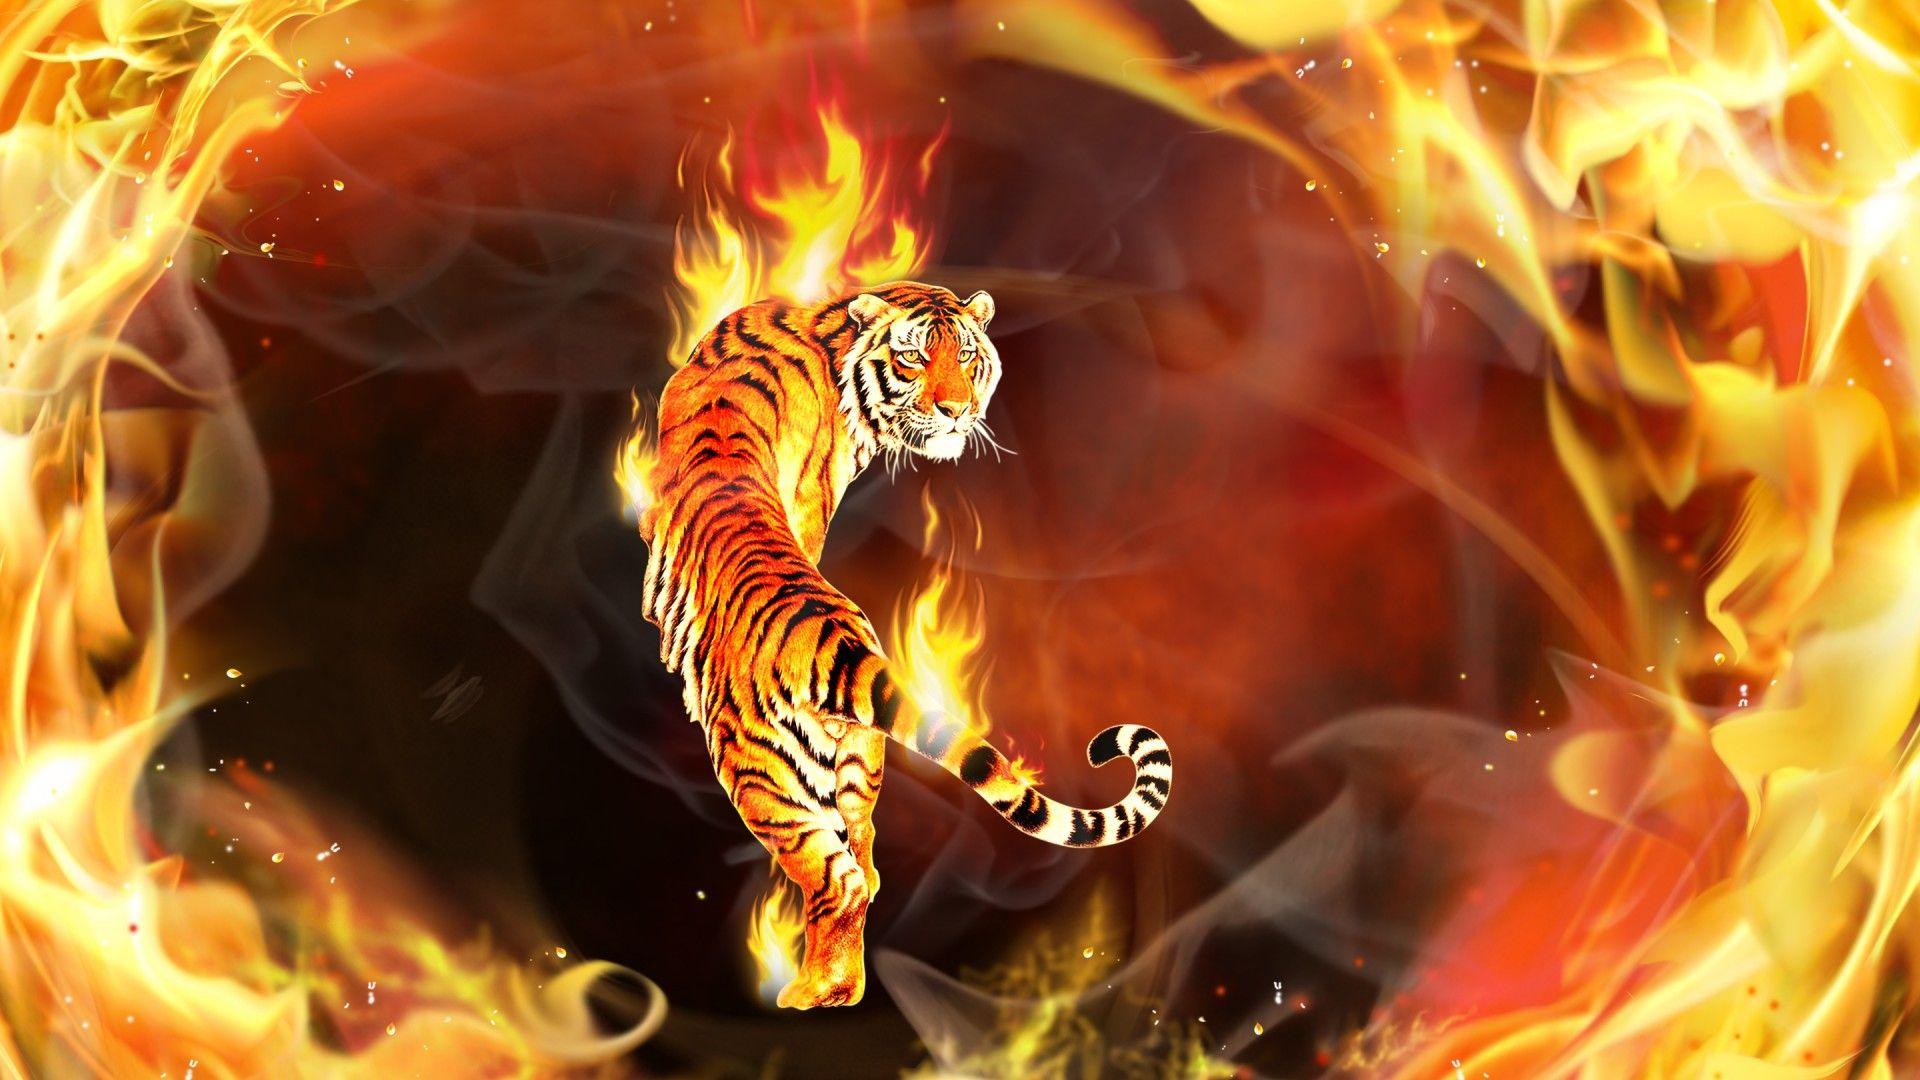 Fire tiger wallpaper [1920x1080]